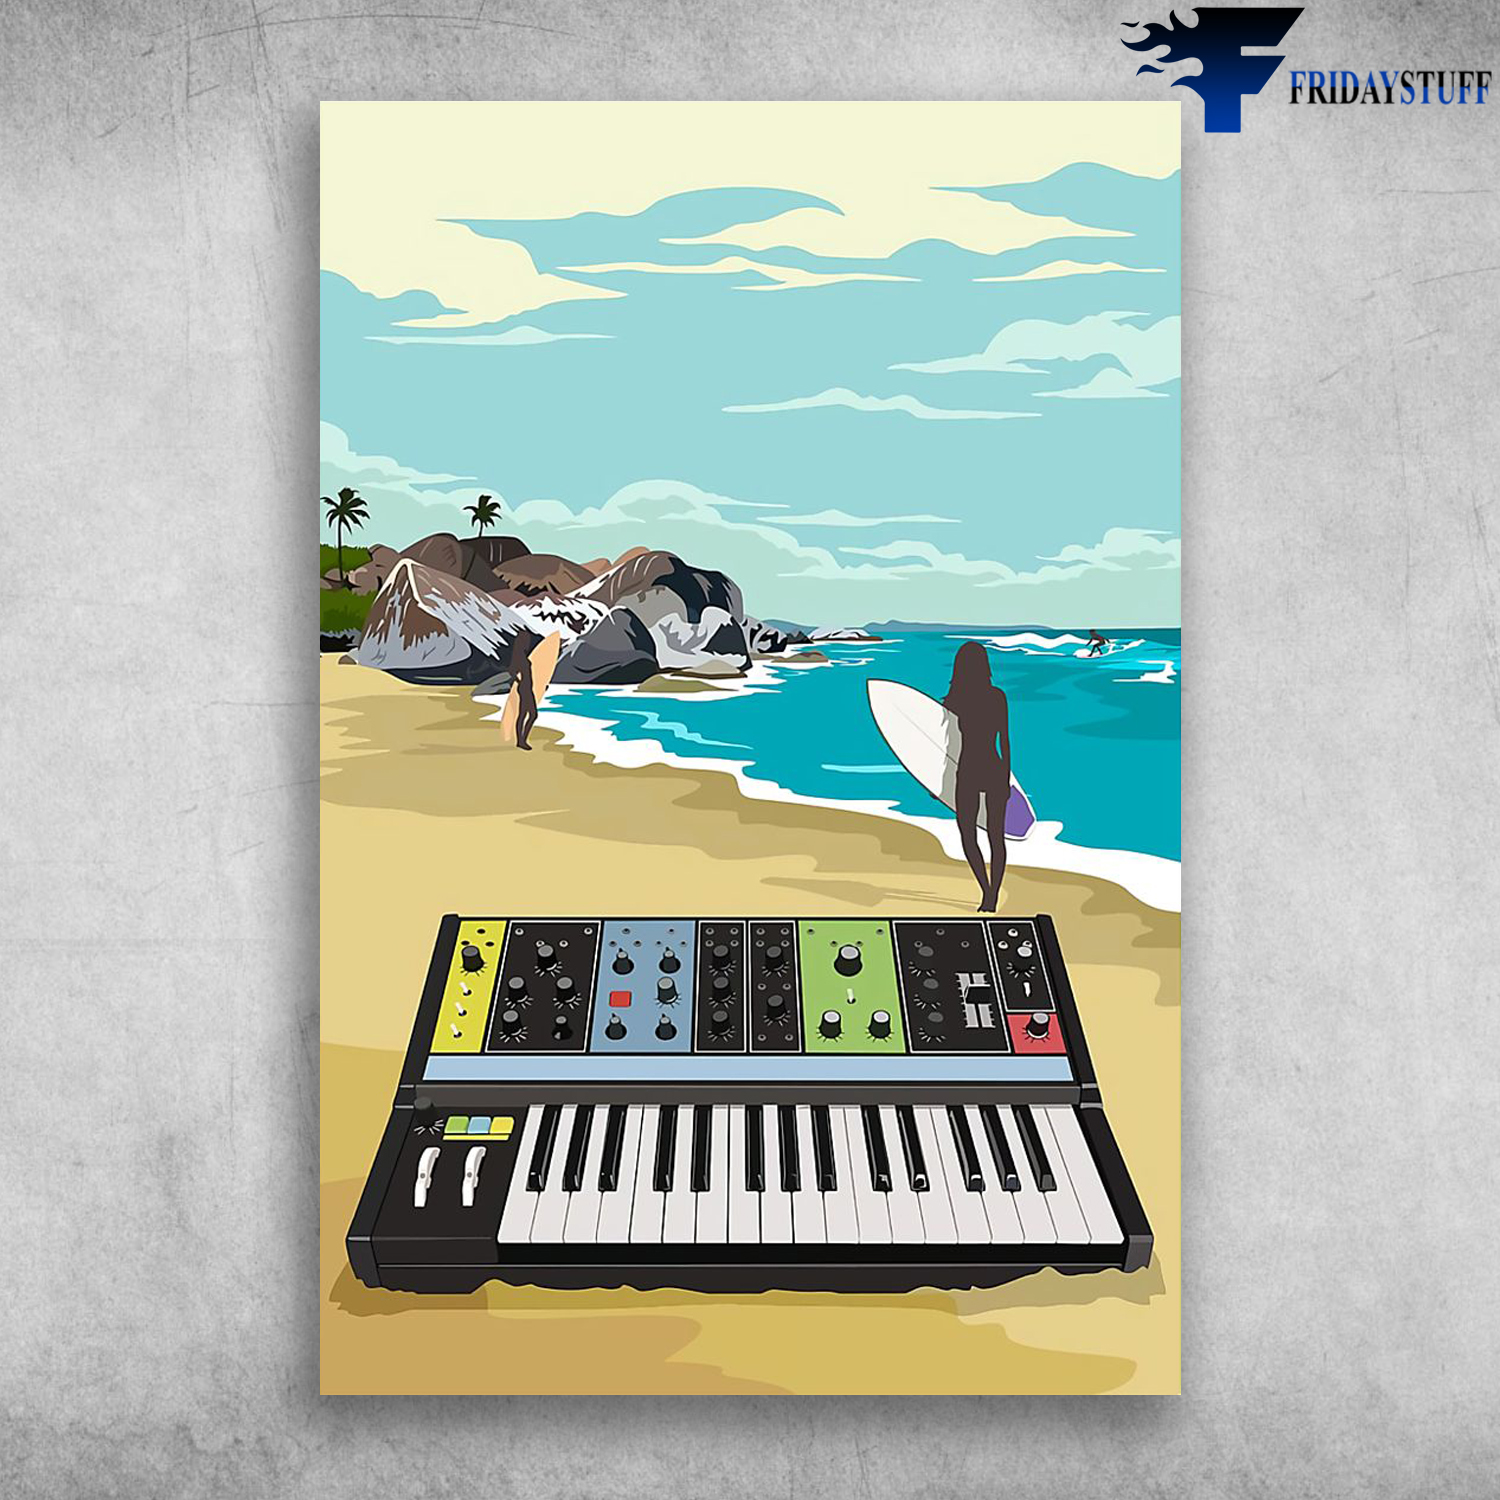 Moog Grandmother Semi-Modular Analog Keyboard Synthesizer On The Beautiful Beach